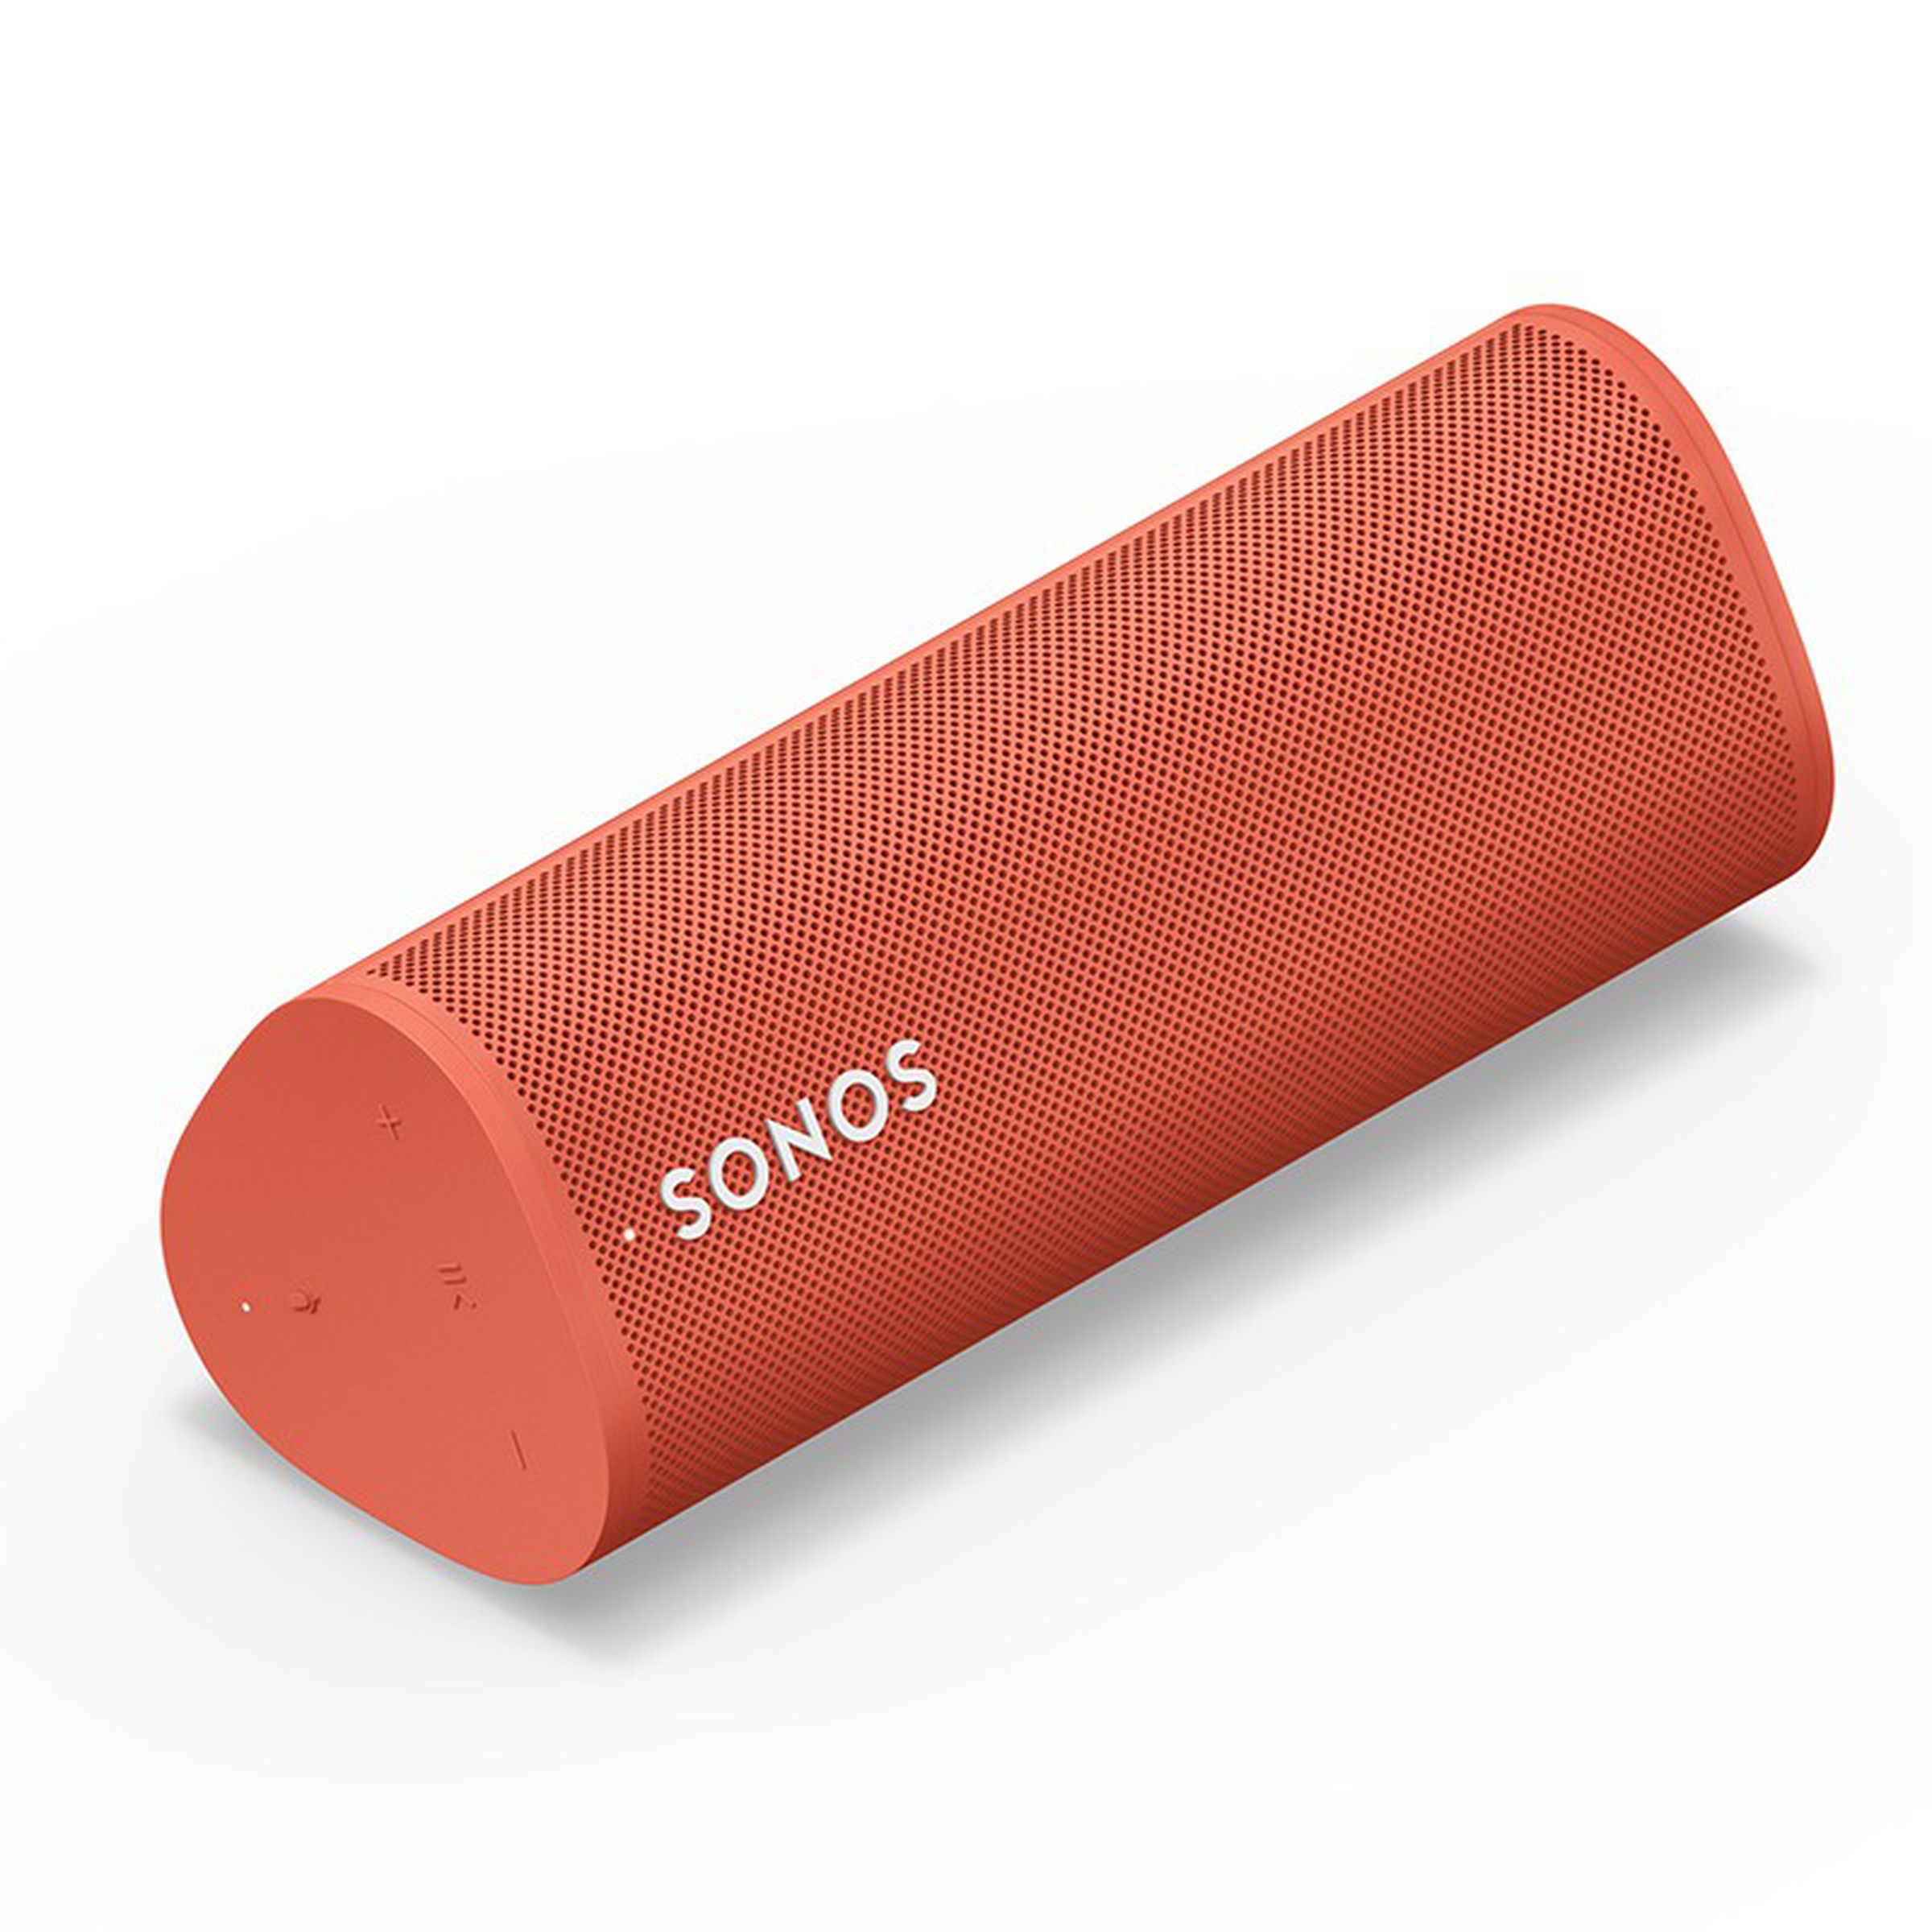 Sonos Roam speaker in red